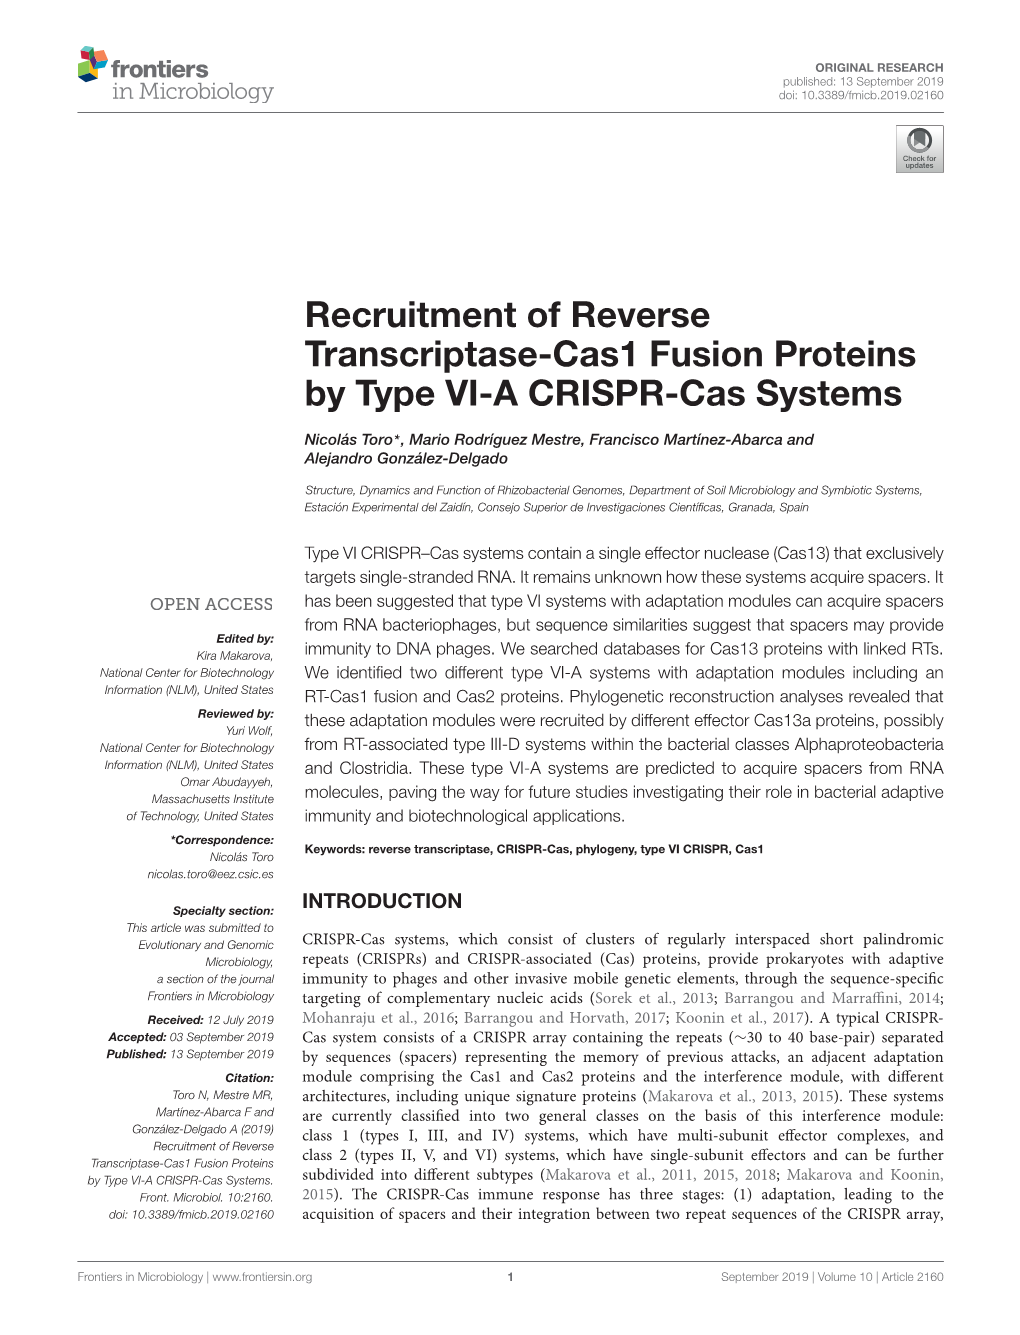 Recruitment of Reverse Transcriptase-Cas1 Fusion Proteins by Type VI-A CRISPR-Cas Systems